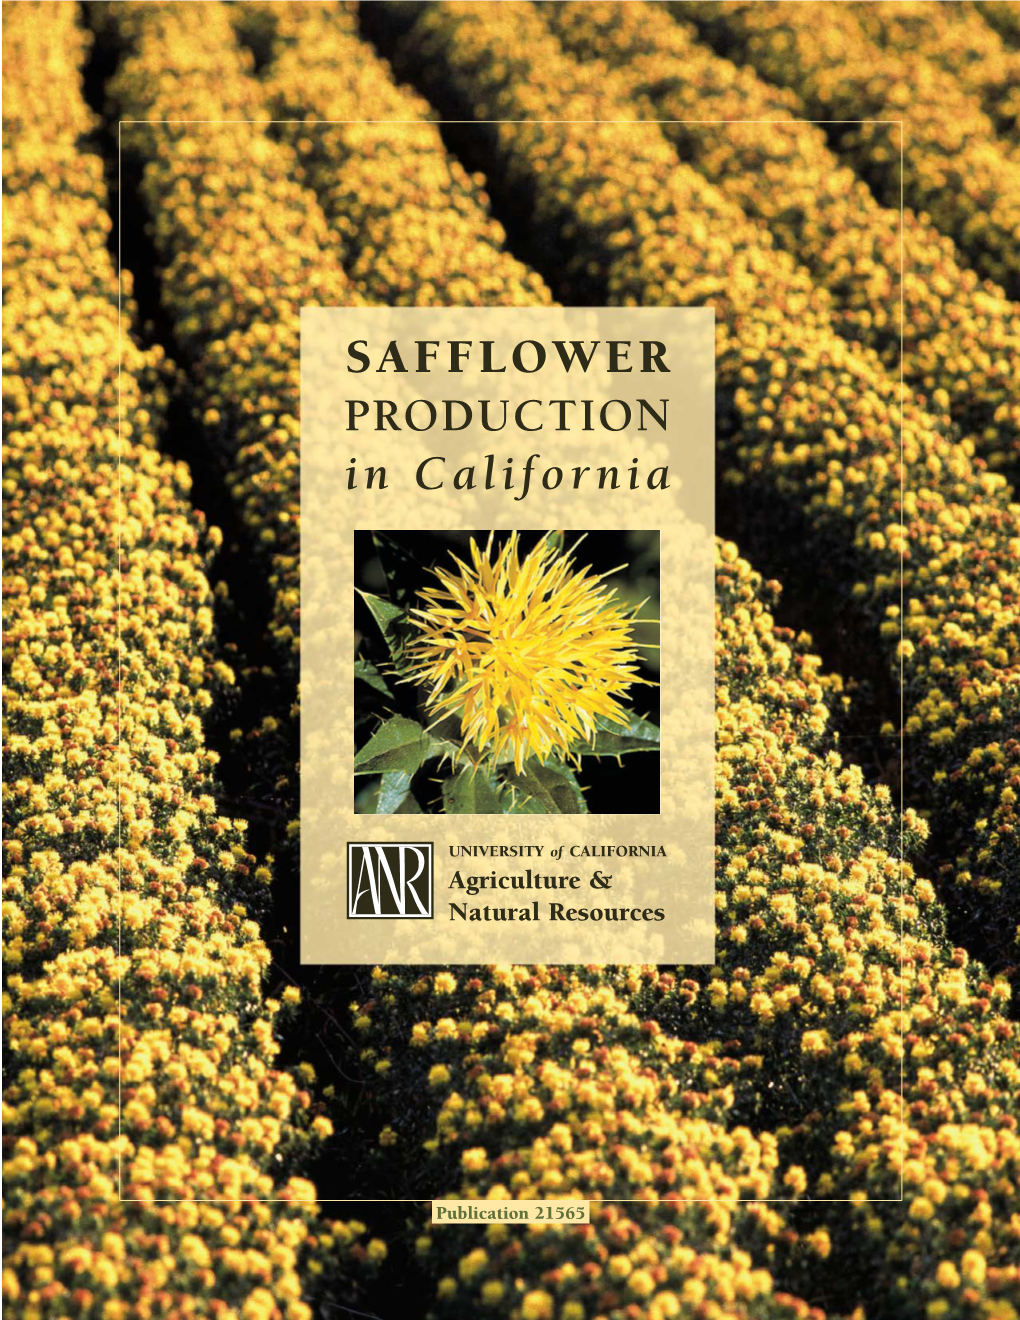 Safflower in California (University of California Division of Agricultural Sciences Circular 532, 1965)